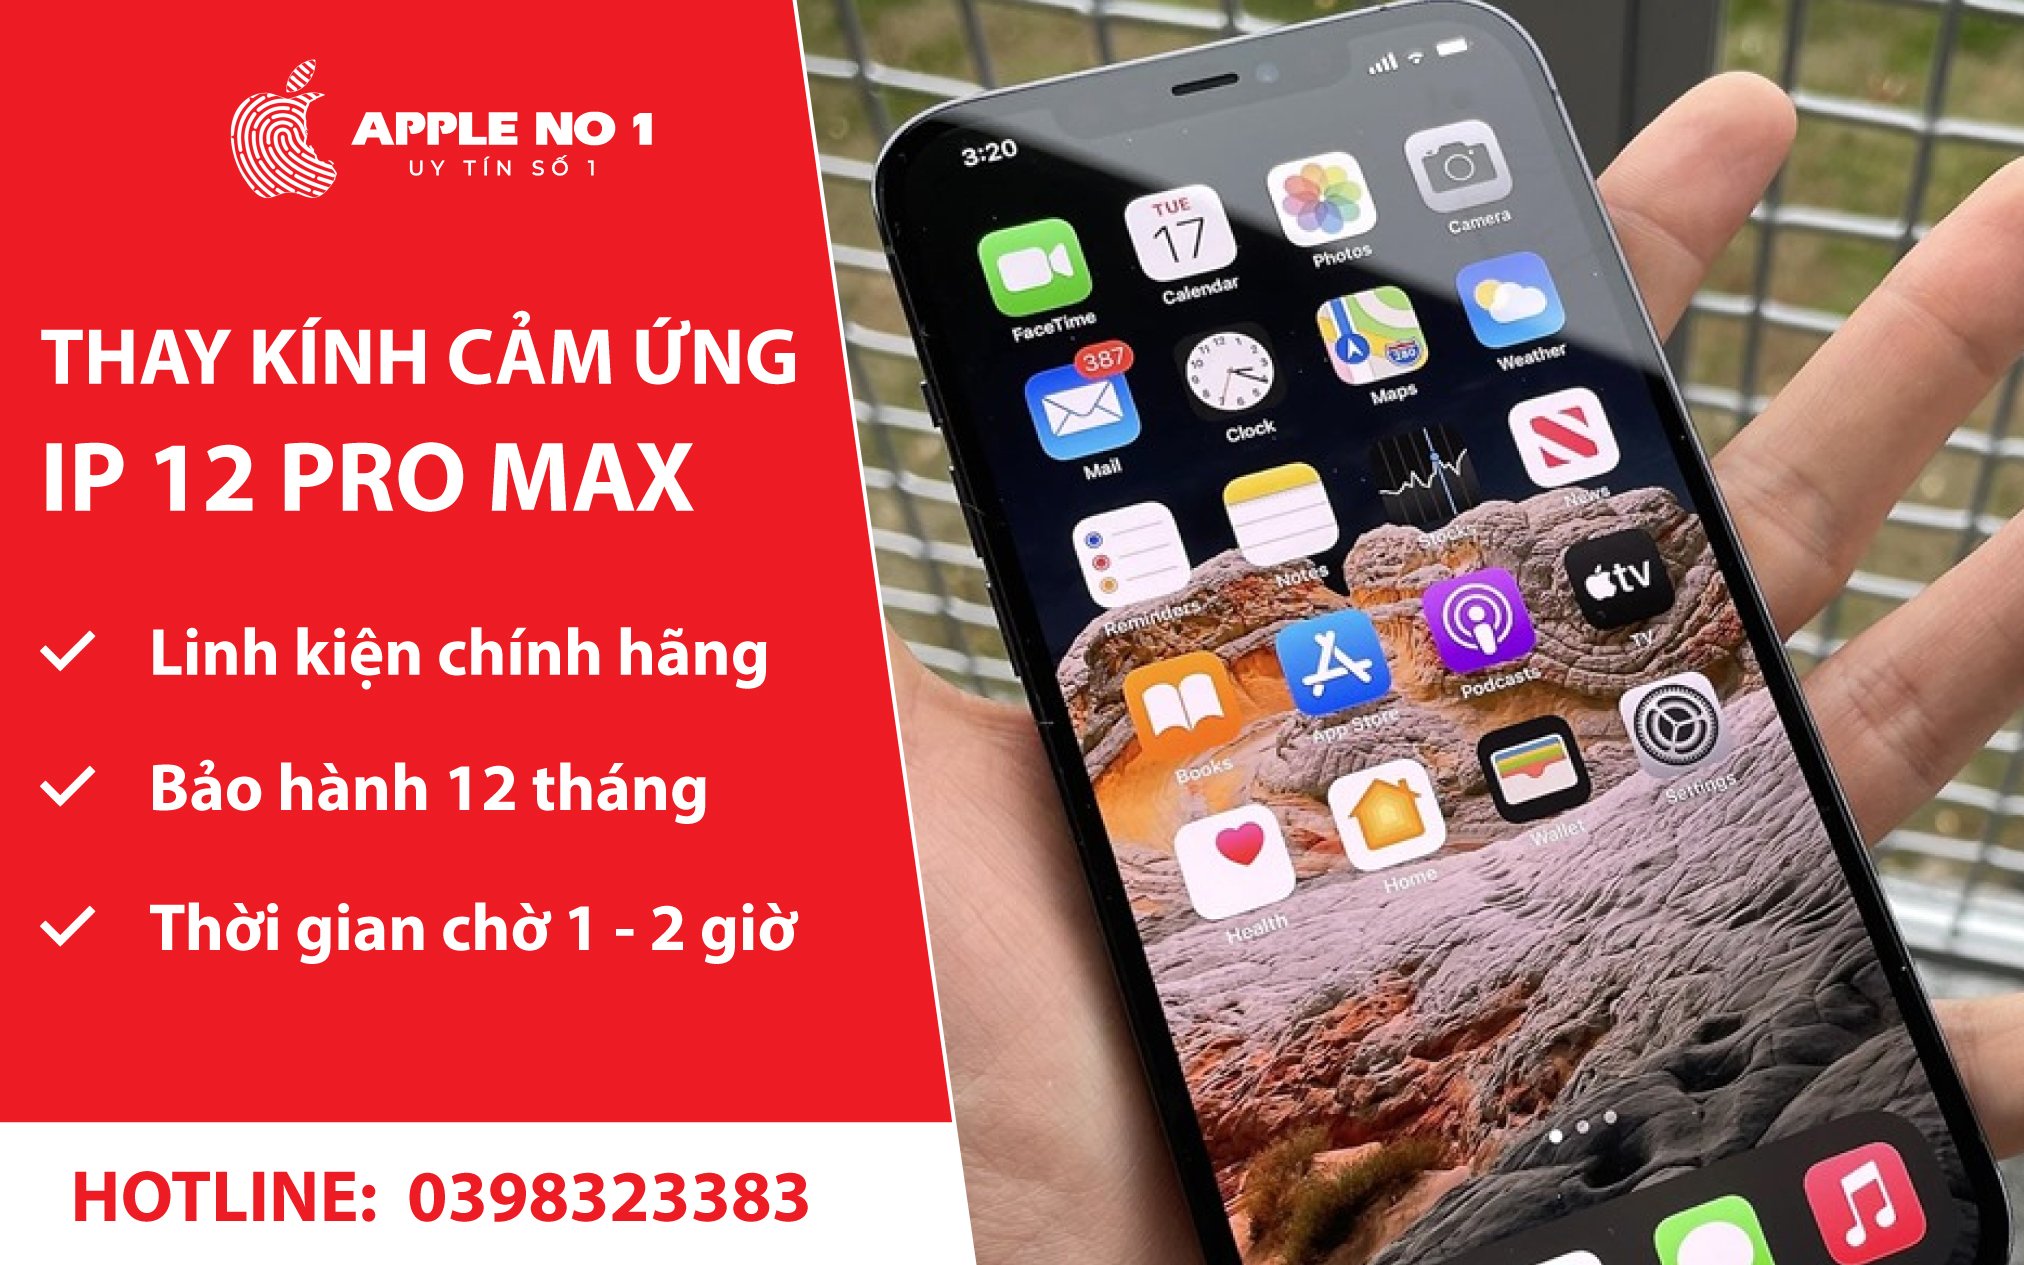 dich vu thay kinh cam ung iphone 12 pro max bao hanh 12 thang chat luong tot nhat tai apple no.1